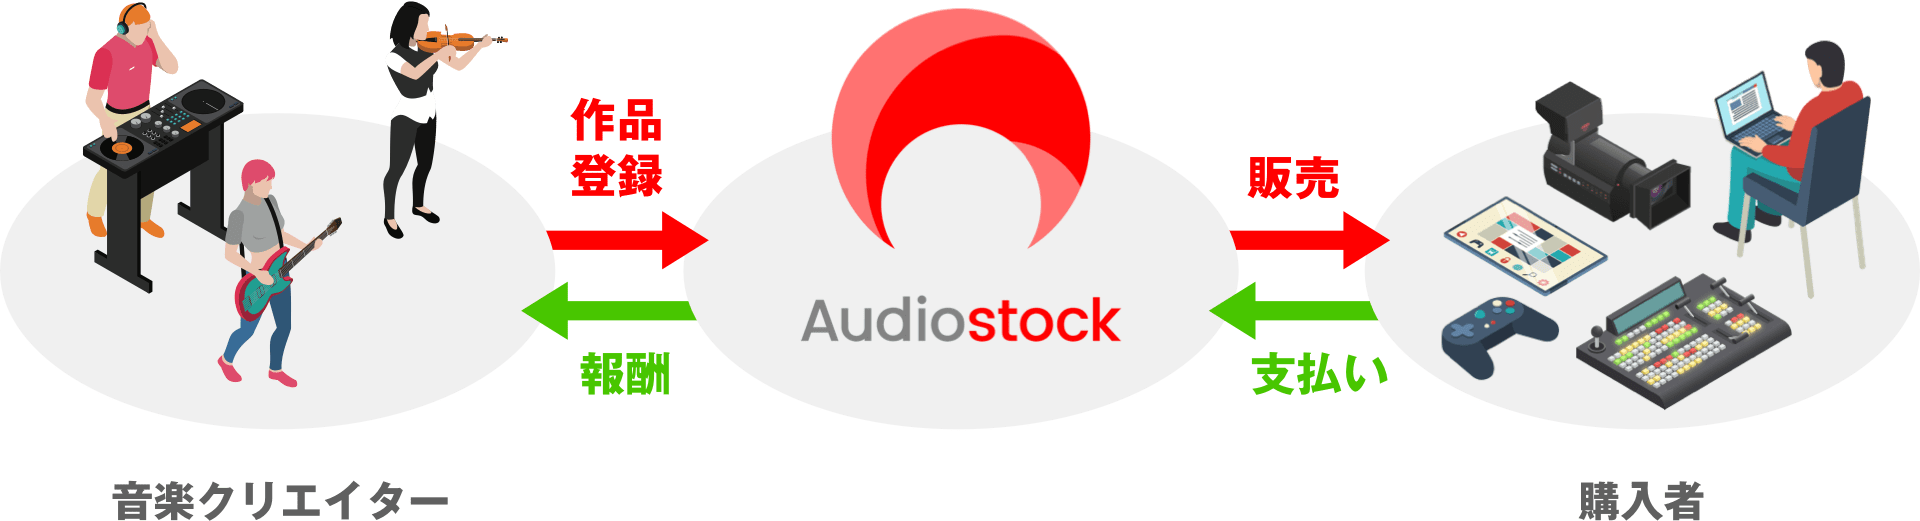 Audiostockストック販売イメージ